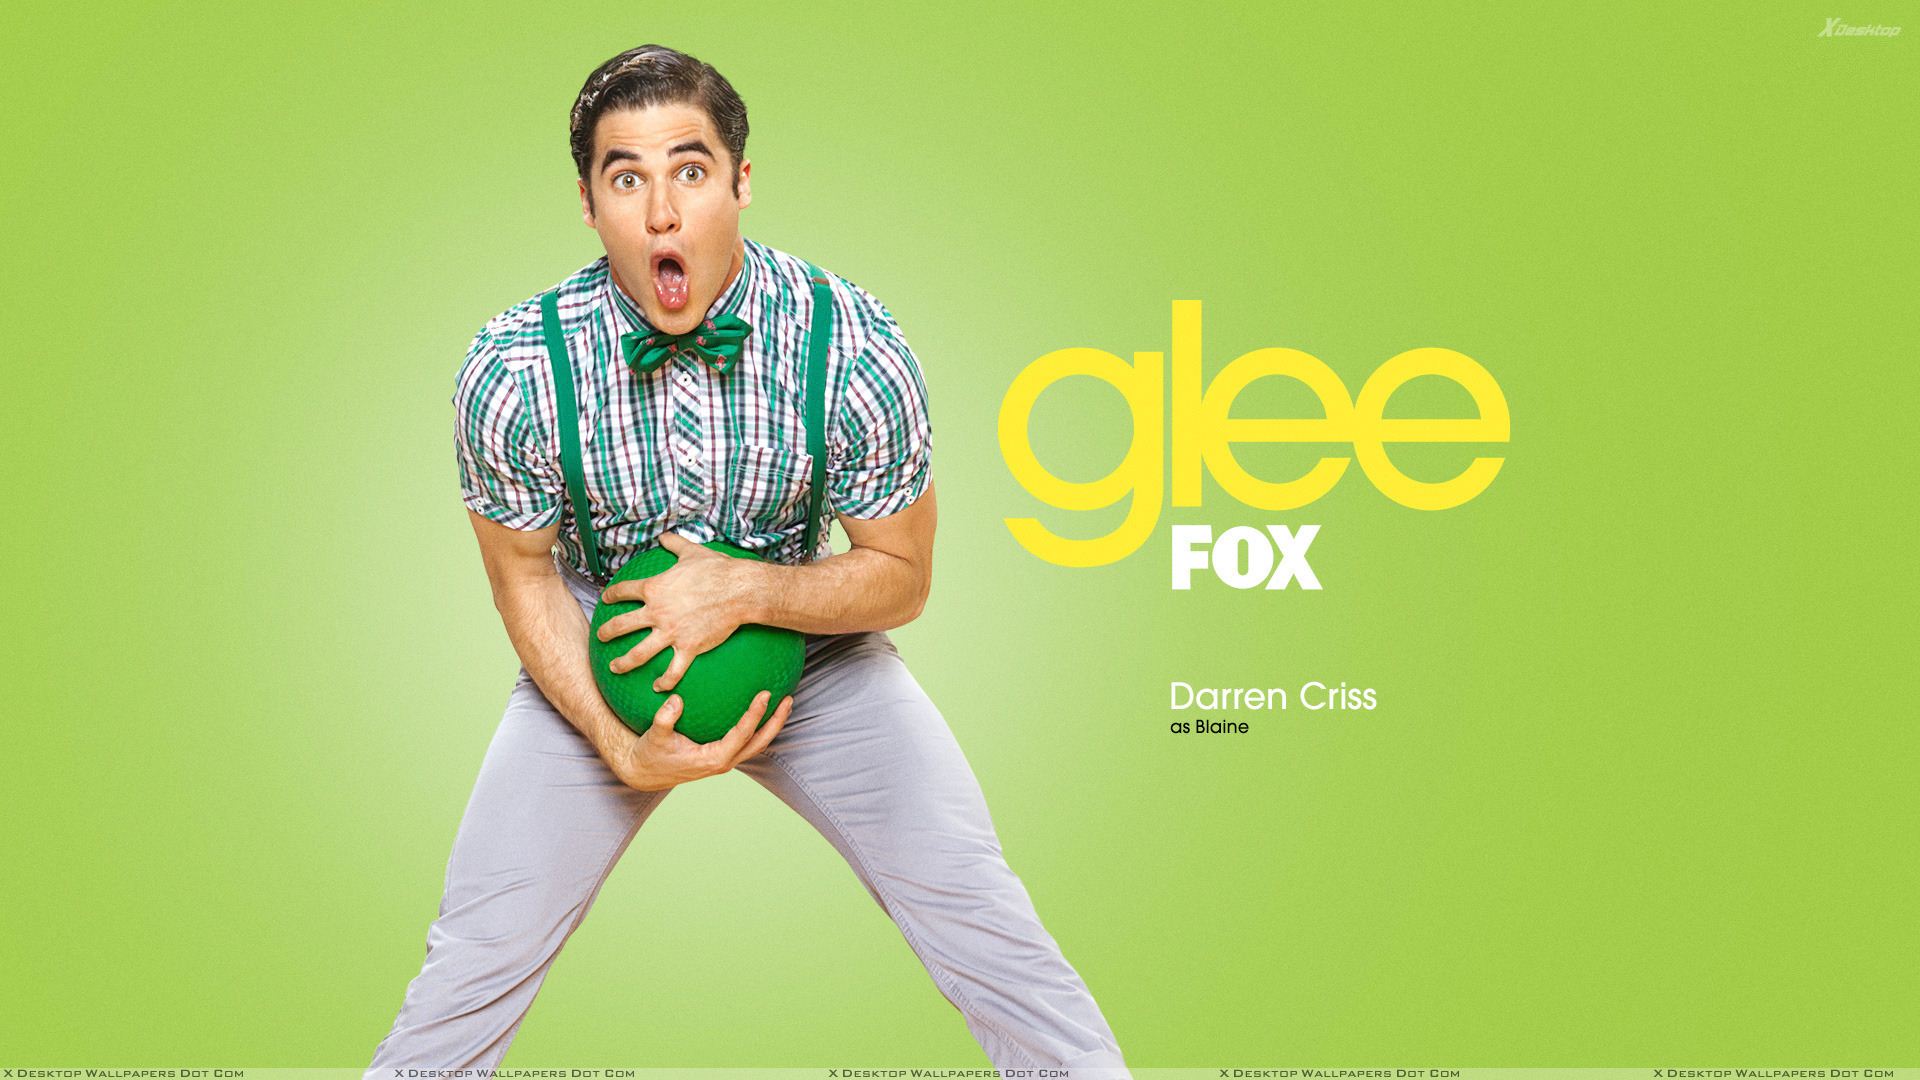 Glee Darren Criss As Blaine Anderson Wallpaper